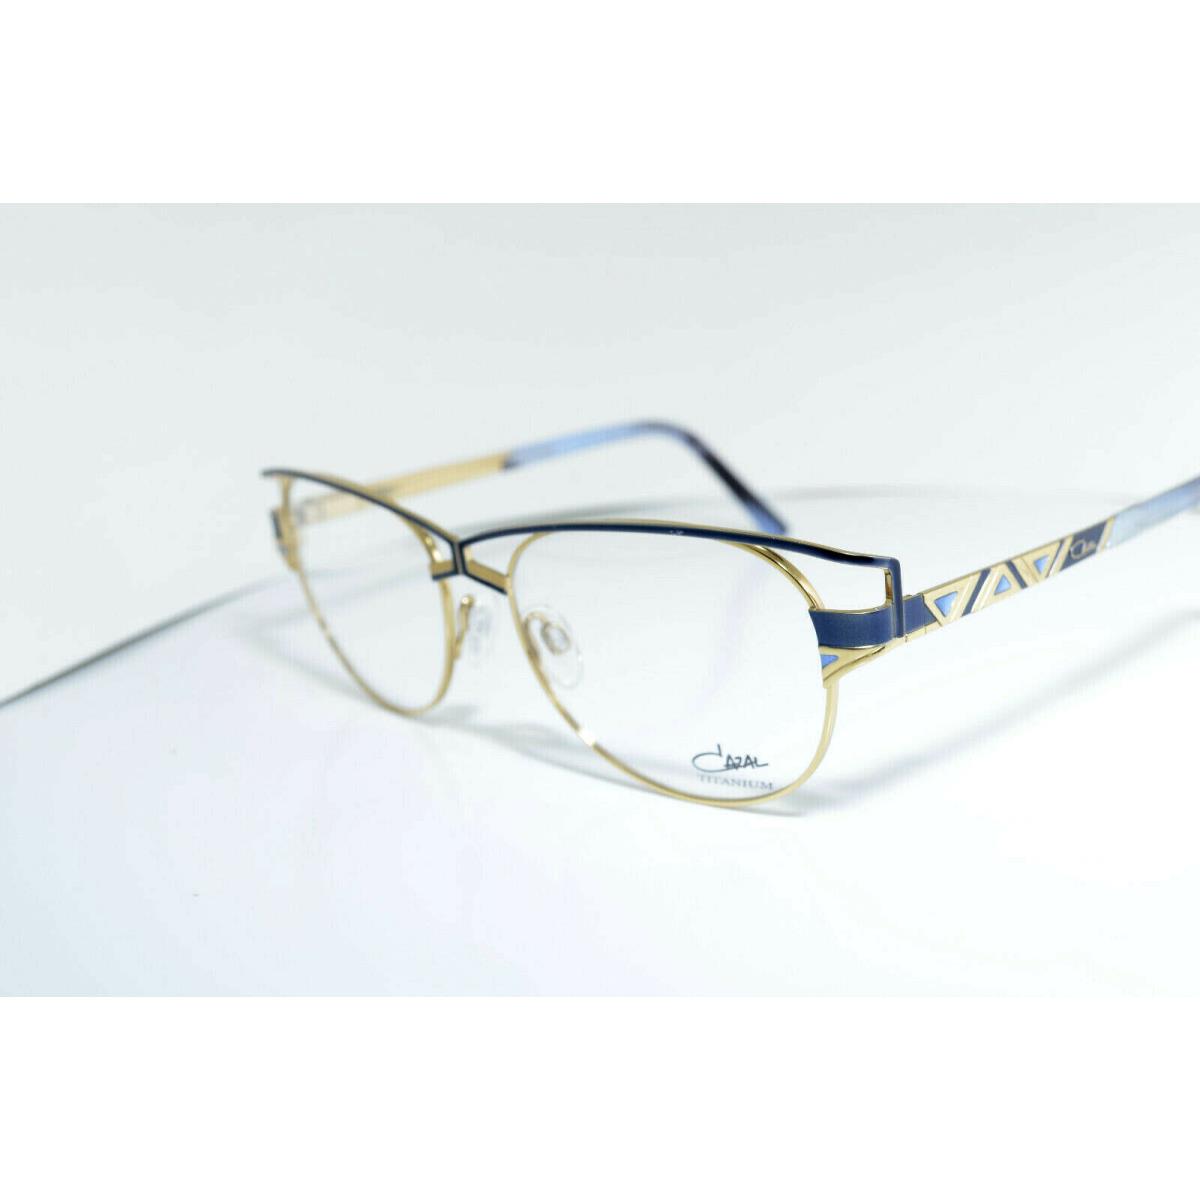 Cazal 1241 C002 Eyeglasses Frame